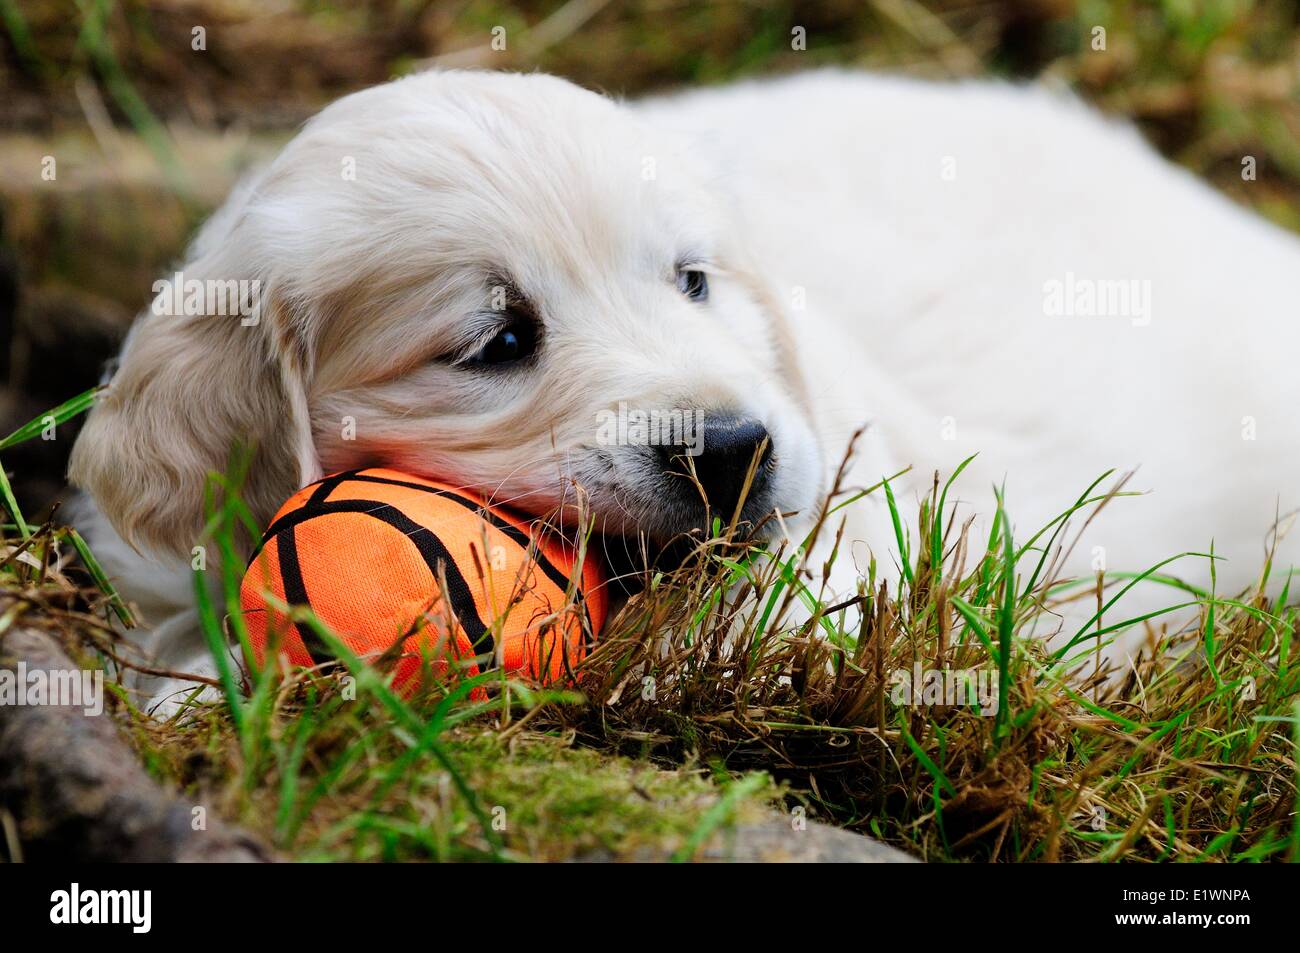 Inglés de pura raza Golden Retriever cachorro descansando sobre una bola de color naranja suave. Foto de stock